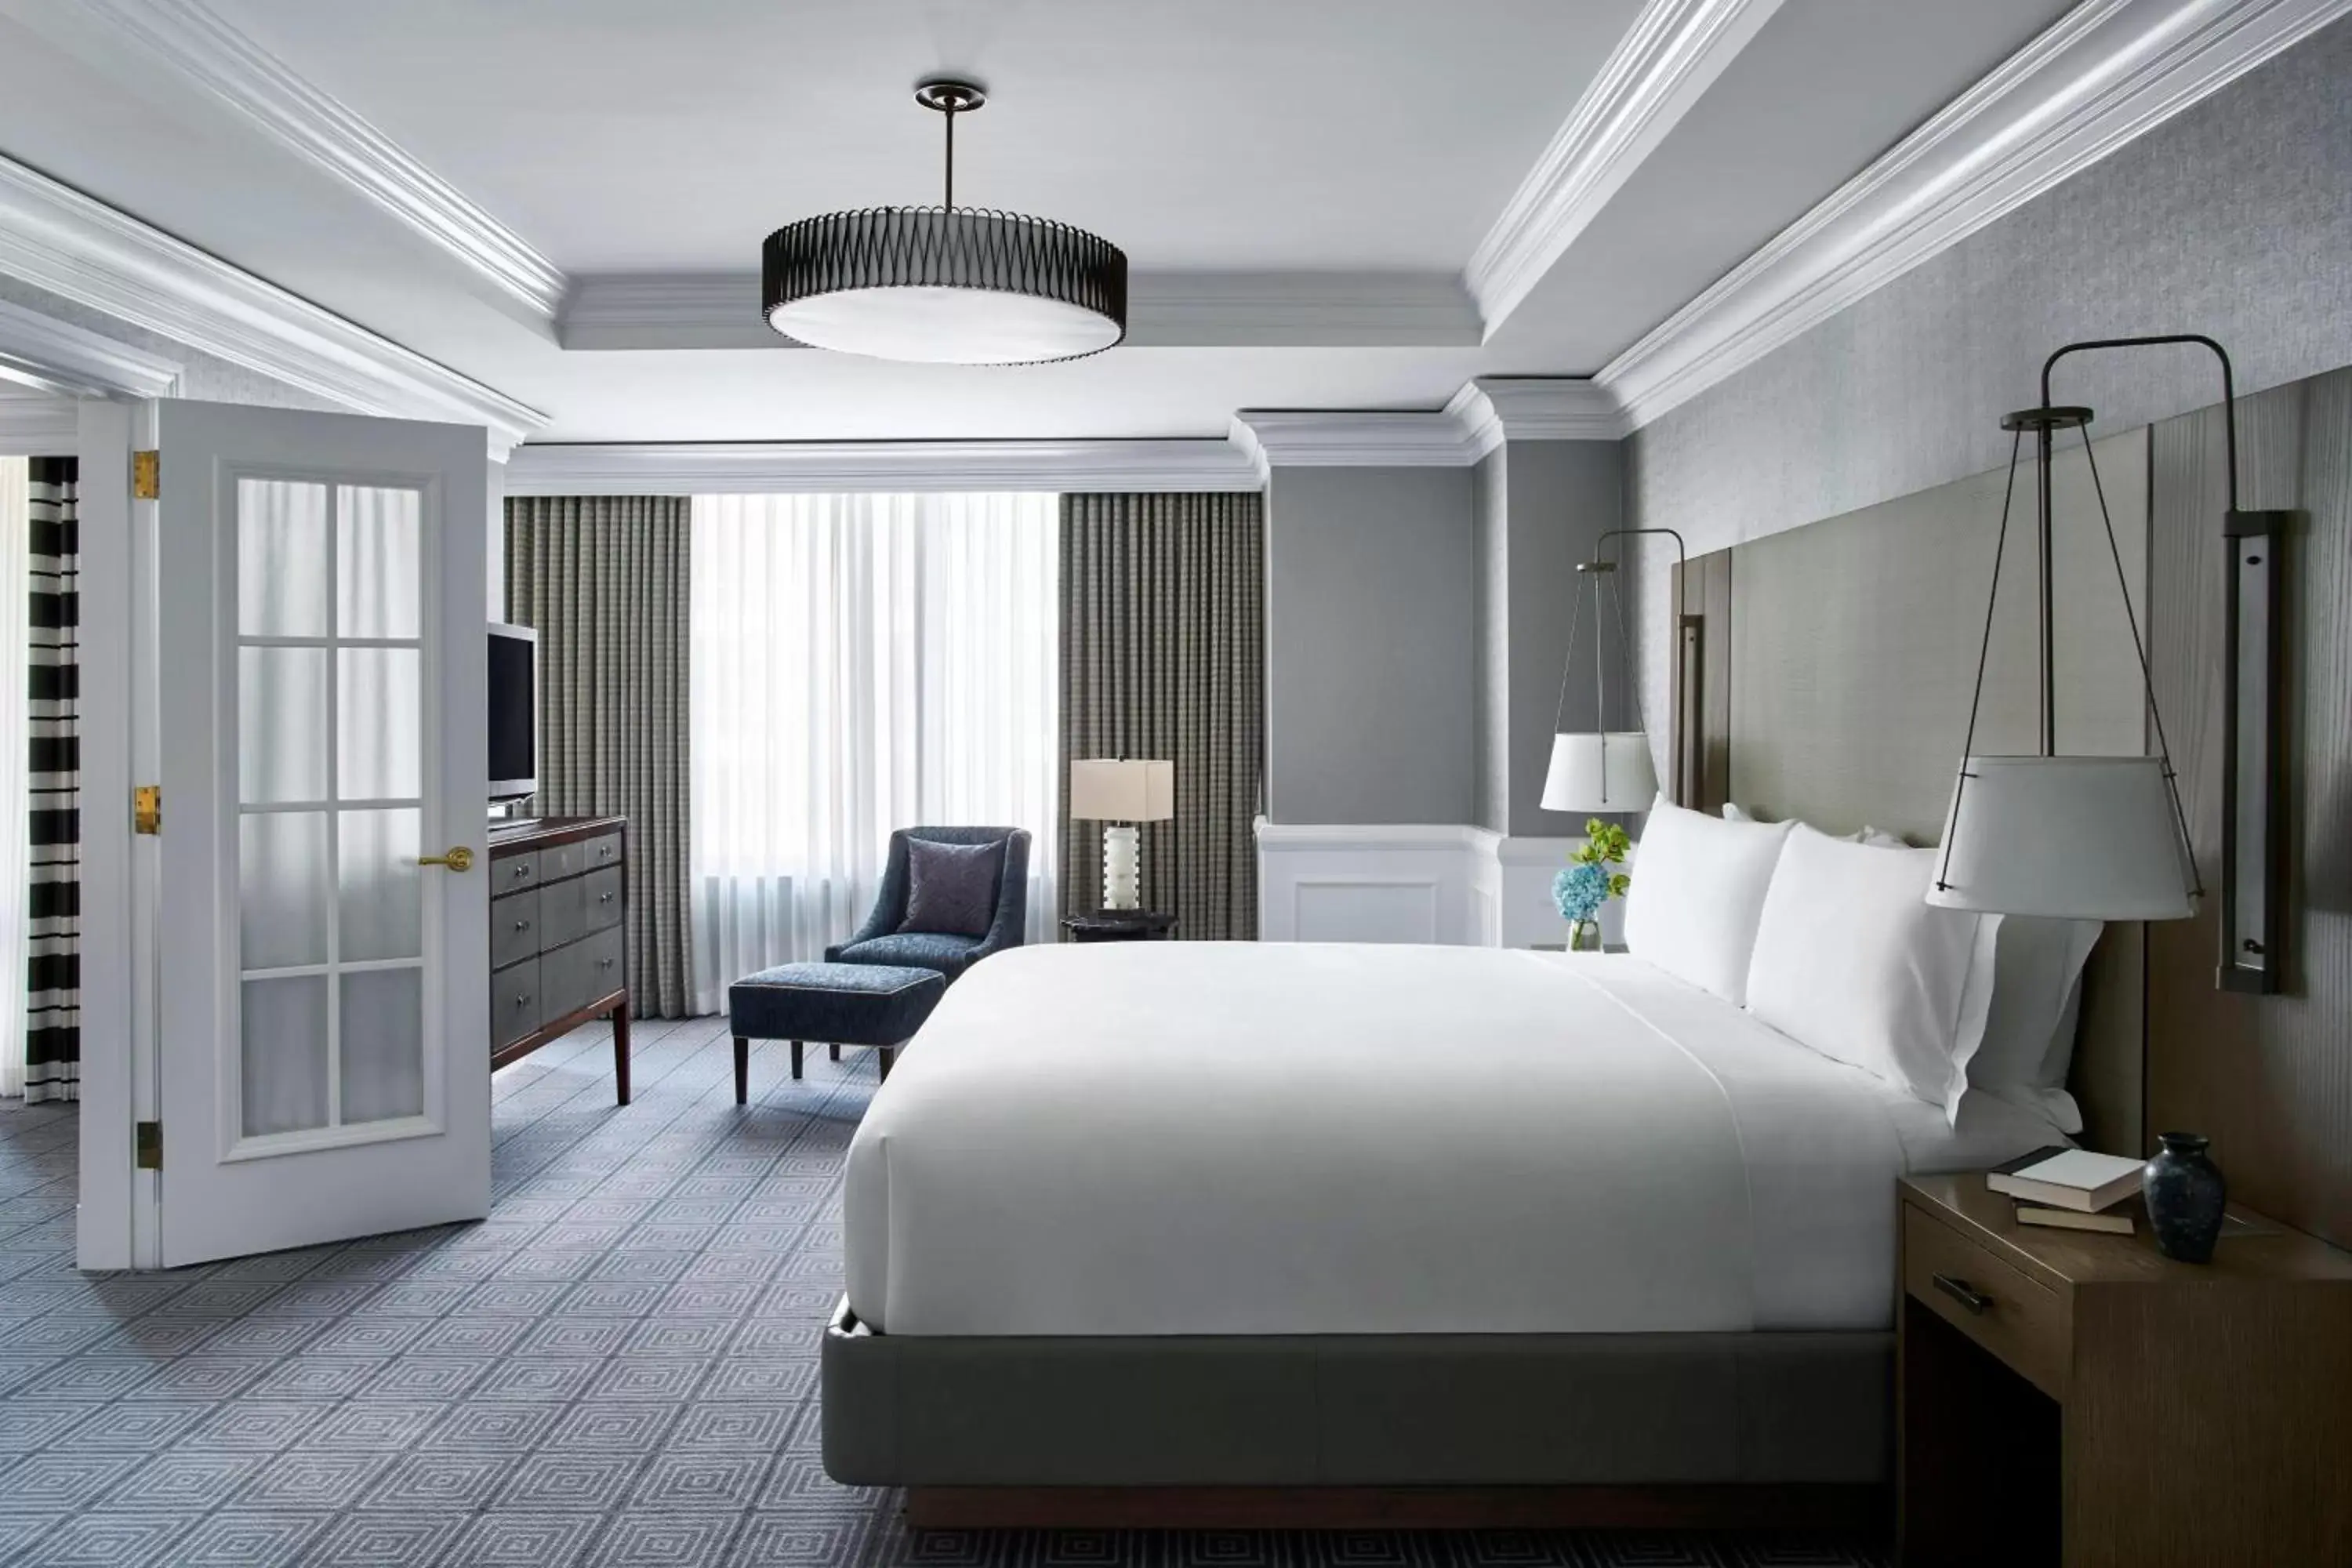 Bedroom in The Ritz-Carlton, Washington, D.C.